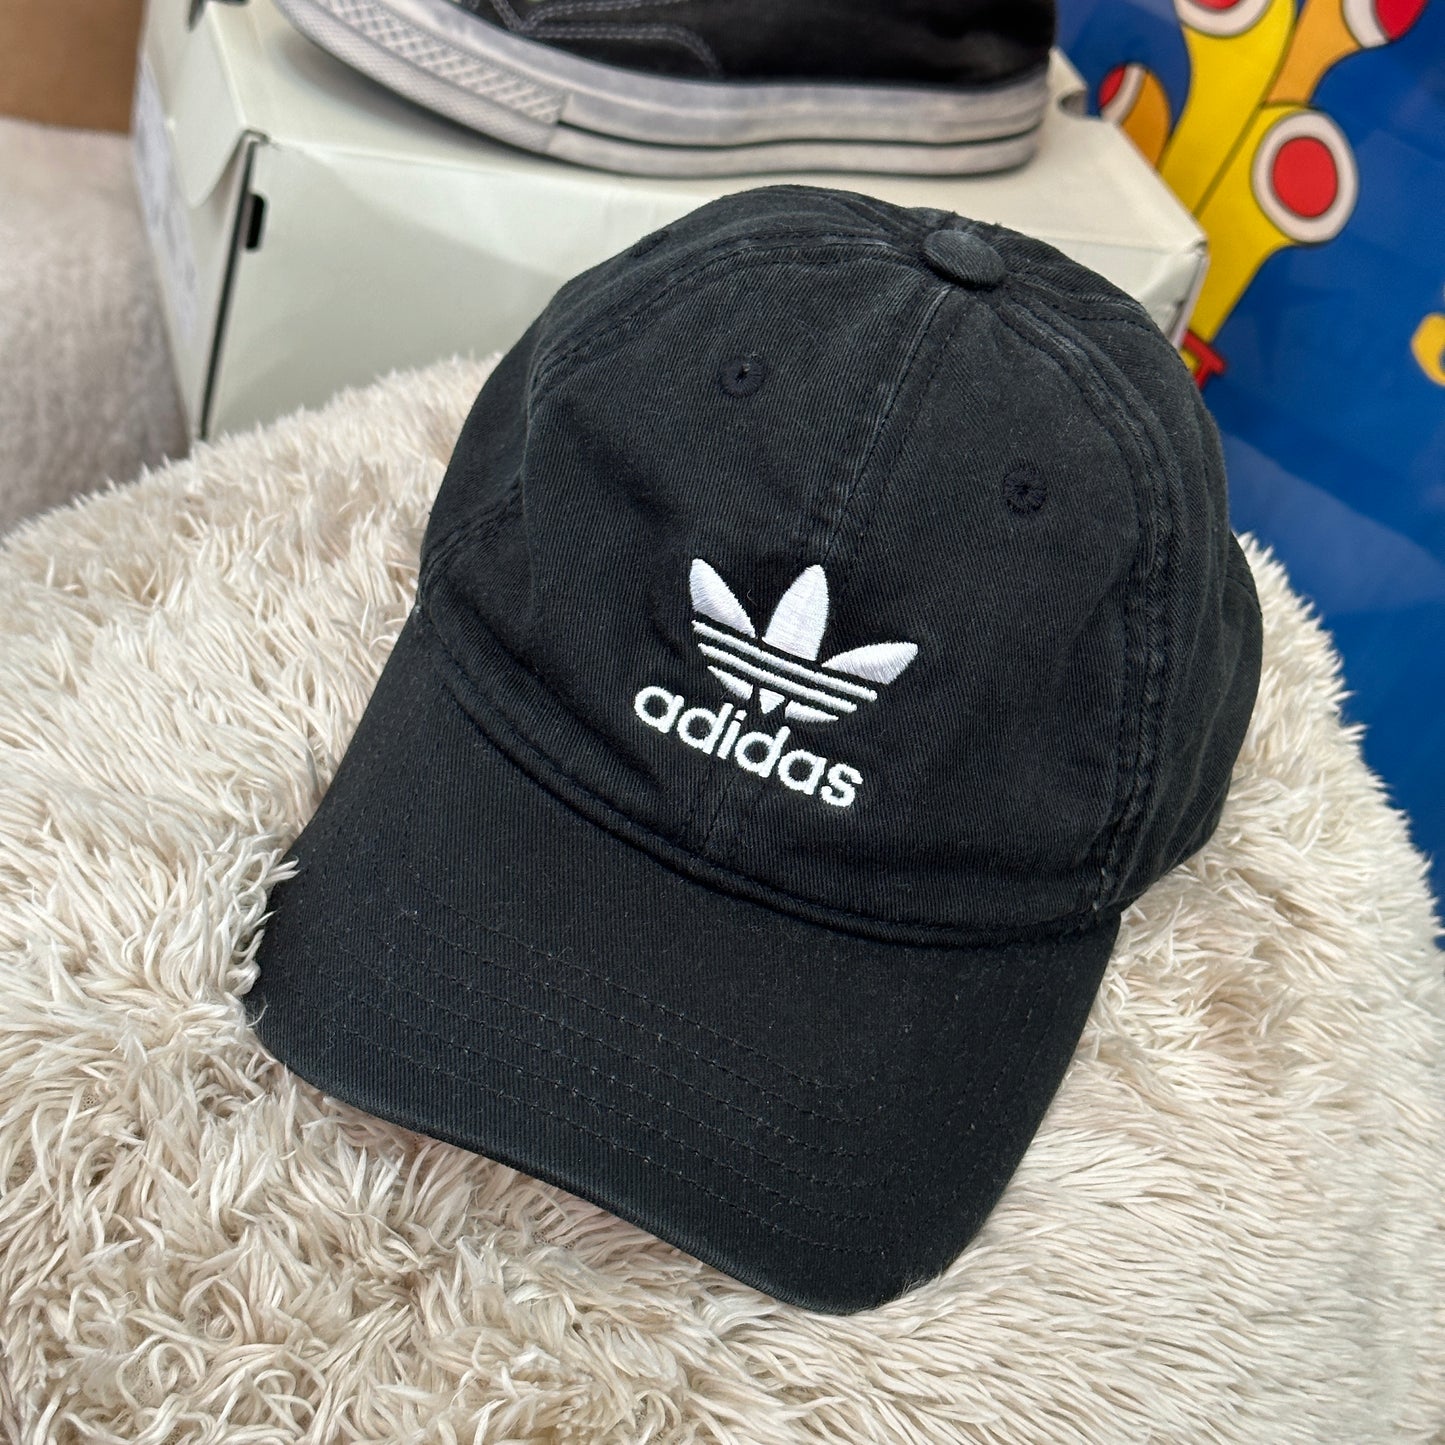 Adidas Original embroidery logo 2017 6-panel cap